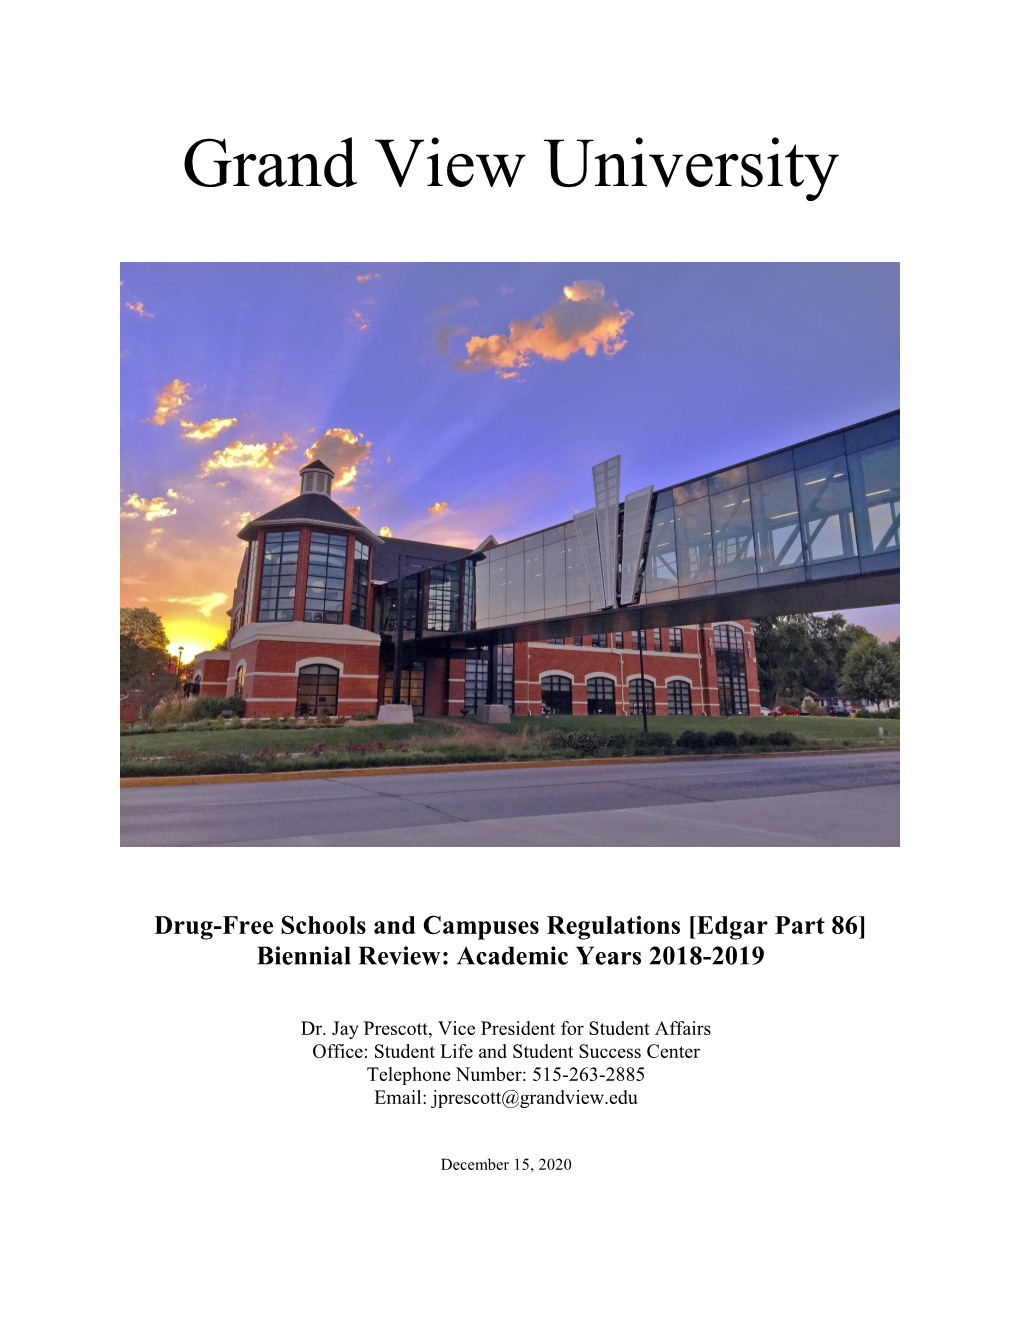 Drug-Free Schools and Campuses Regulations [Edgar Part 86] Biennial Review: Academic Years 2018-2019